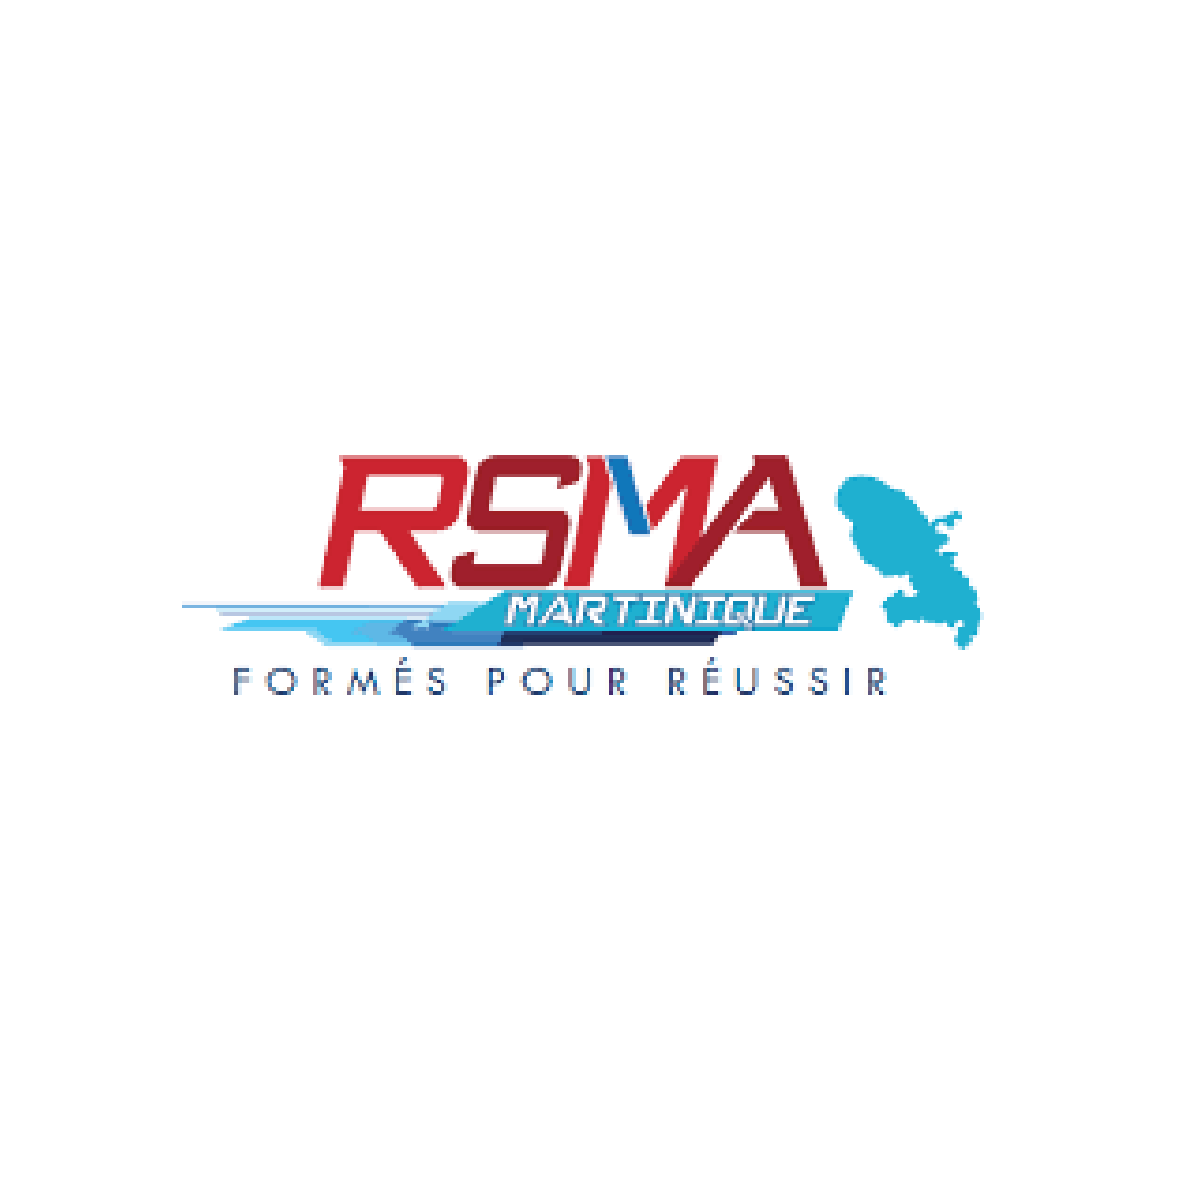 logo_rsma_martinique_guadeloupe_regidom_clients_communication.png@4x